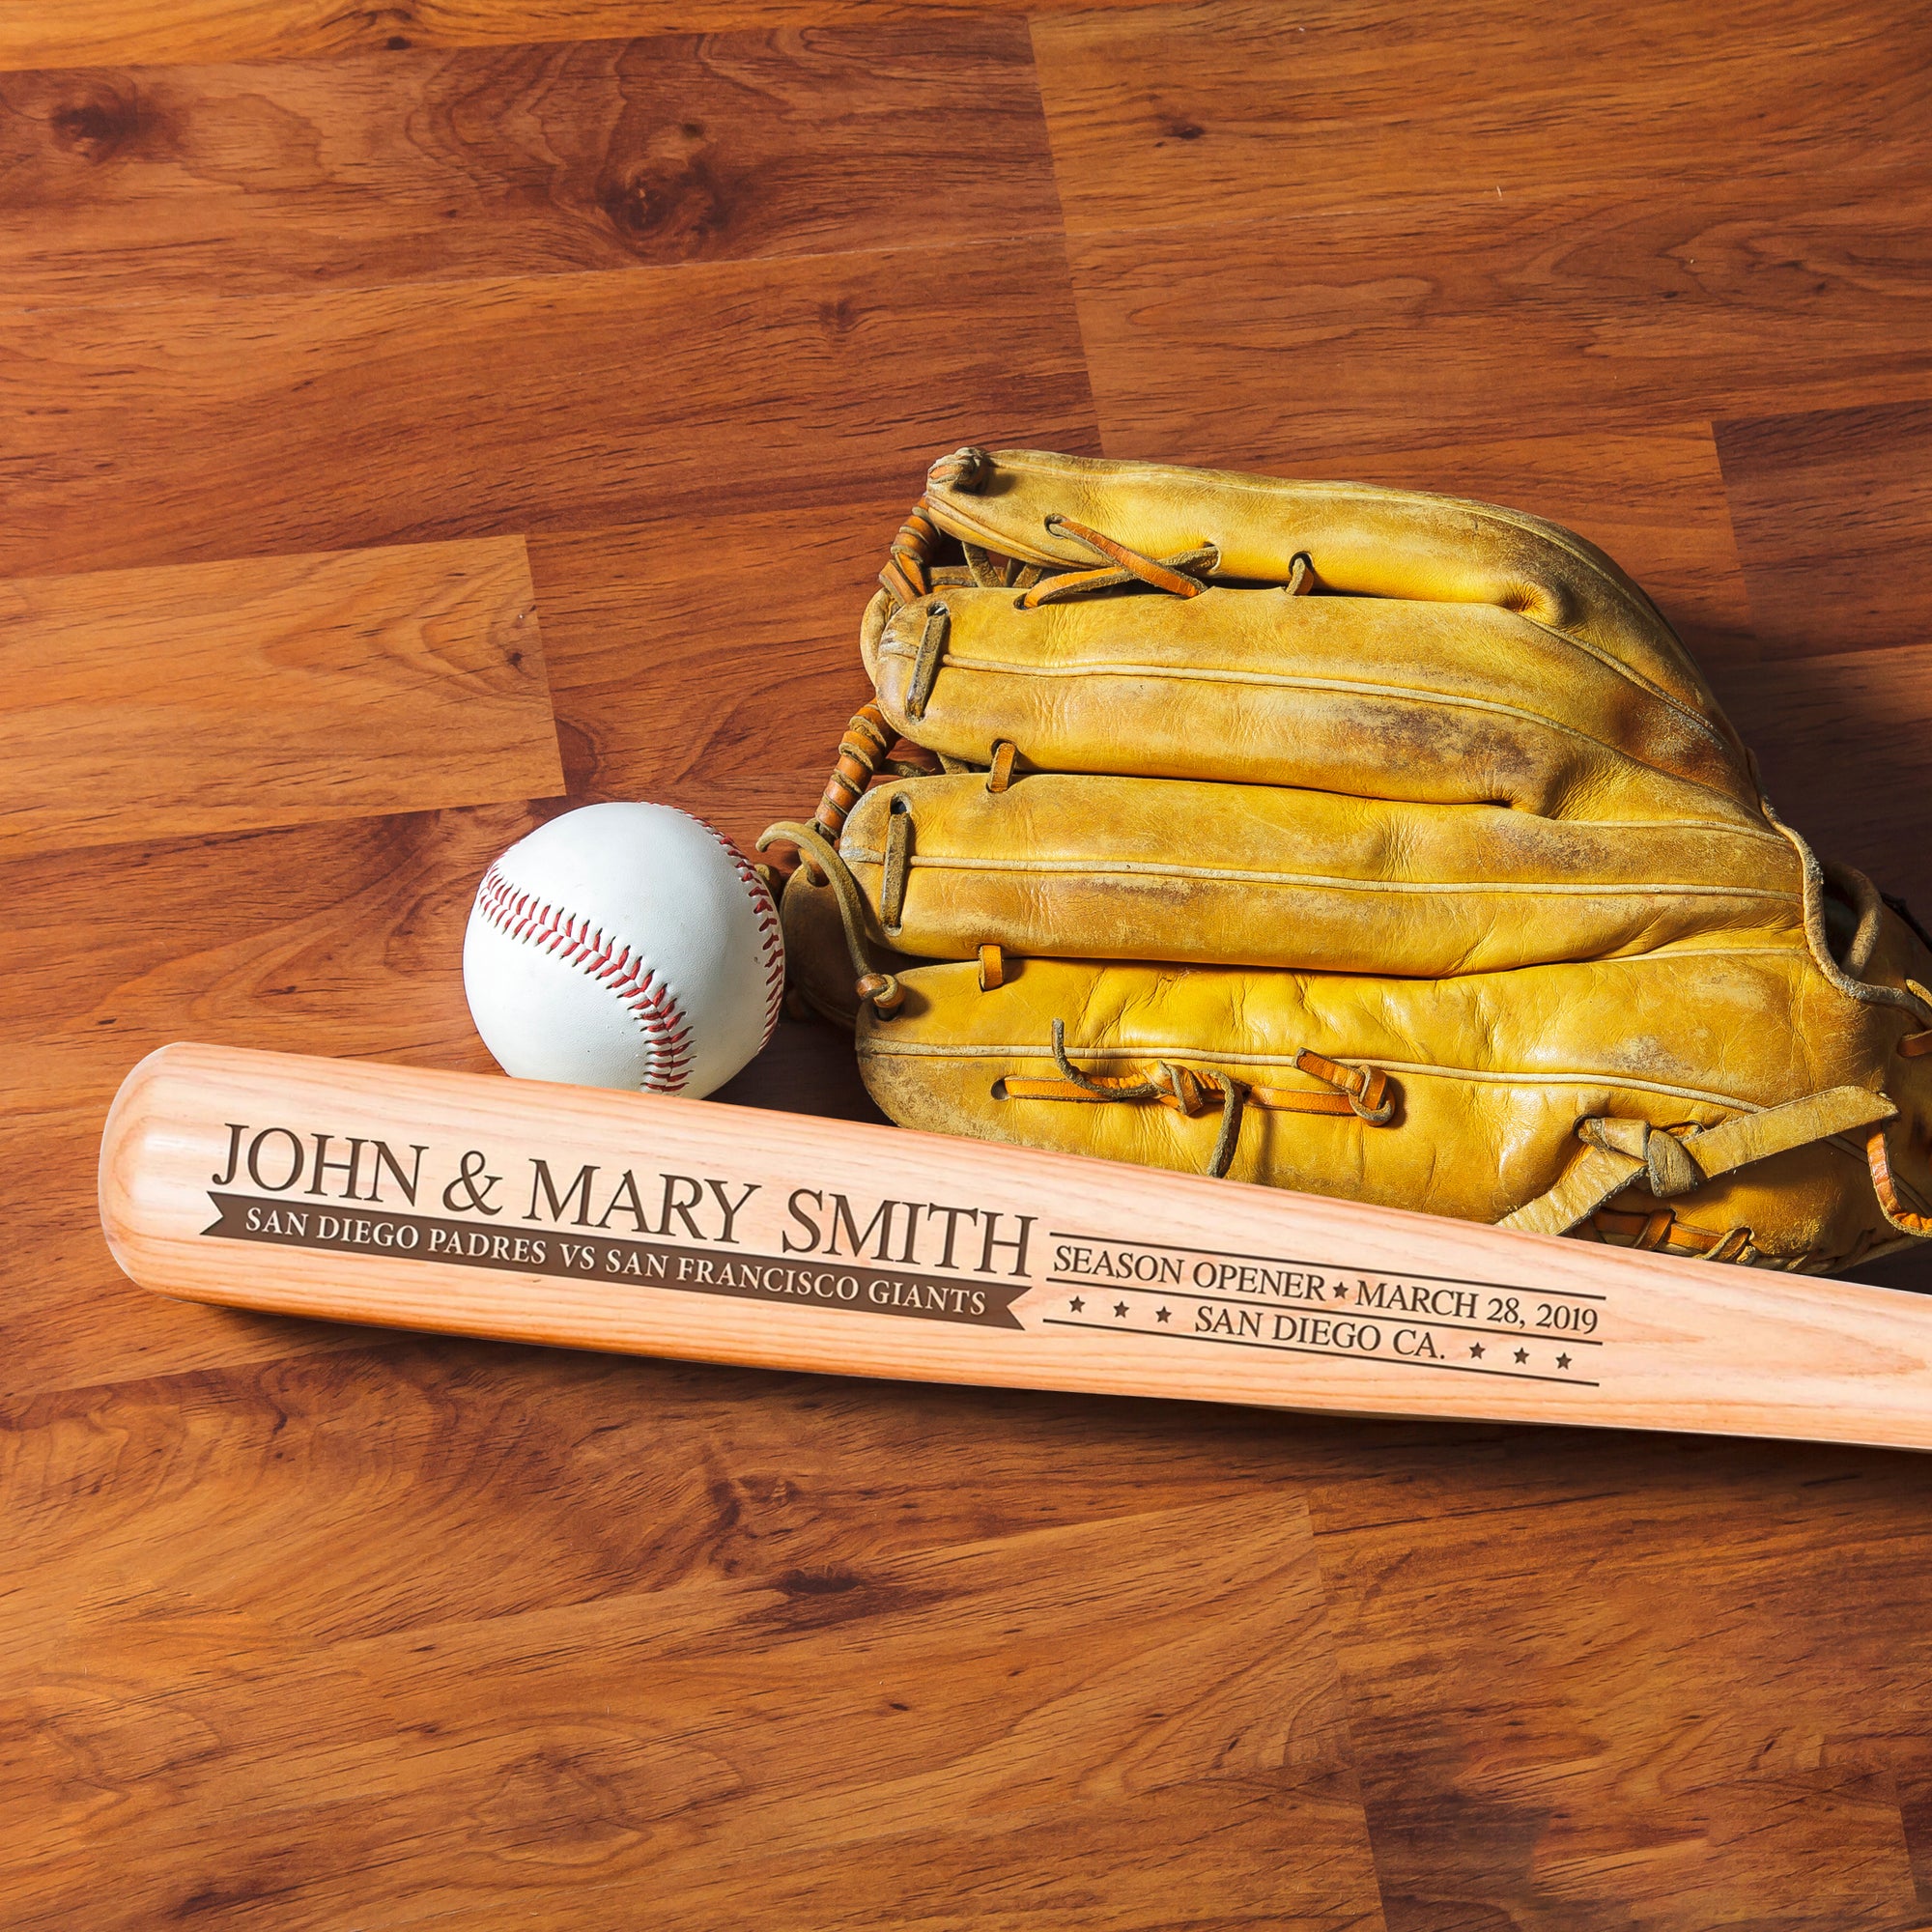 Your Favorite Team Personalized Décor Baseball Bat shelf decor - Season Opener